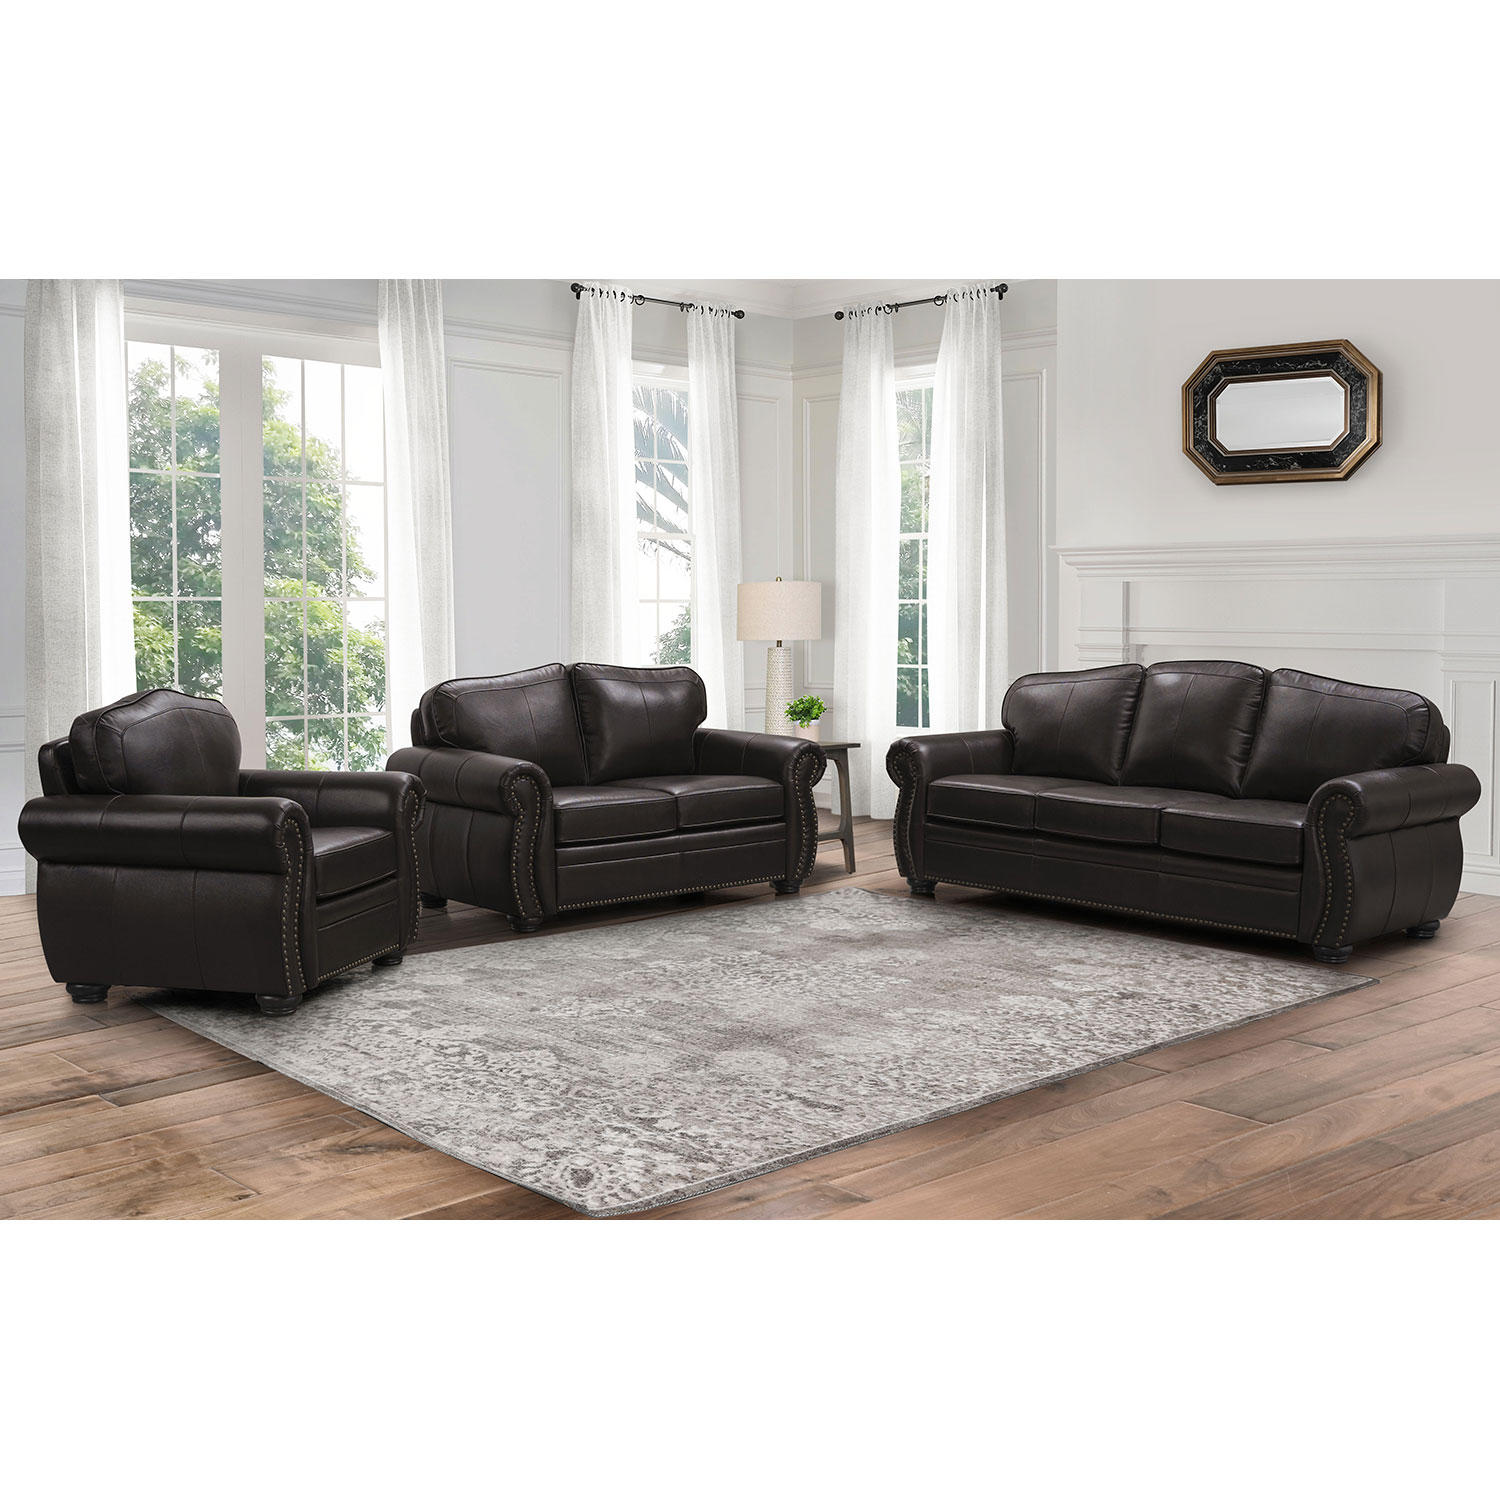 Sophia 3-Piece Top-Grain Leather Living Room Sofa Set